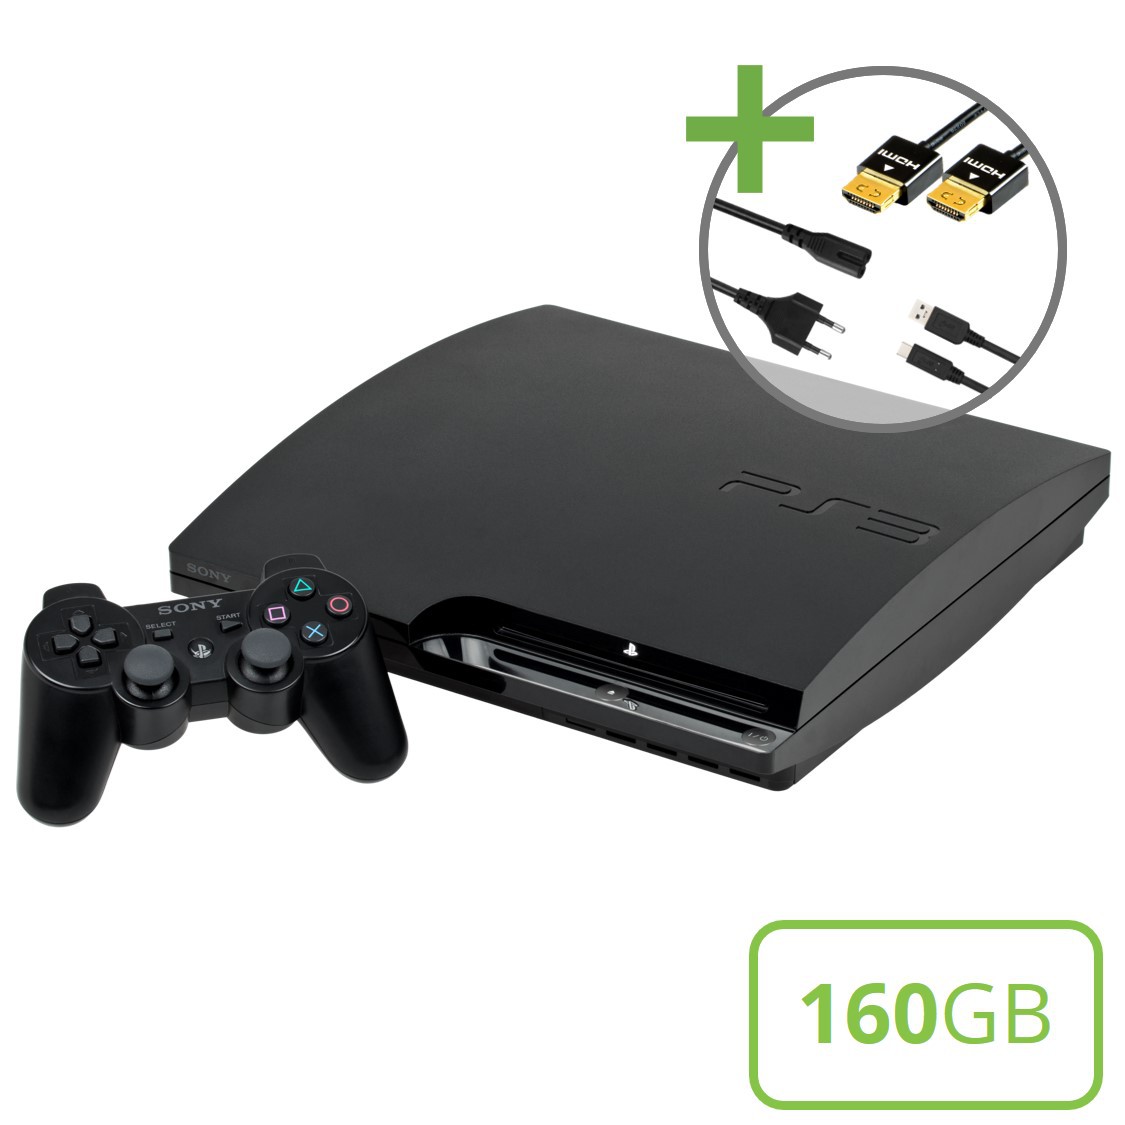 Sony PlayStation 3 Slim (160GB) Starter Pack - DualShock Edition Kopen | Playstation 3 Hardware